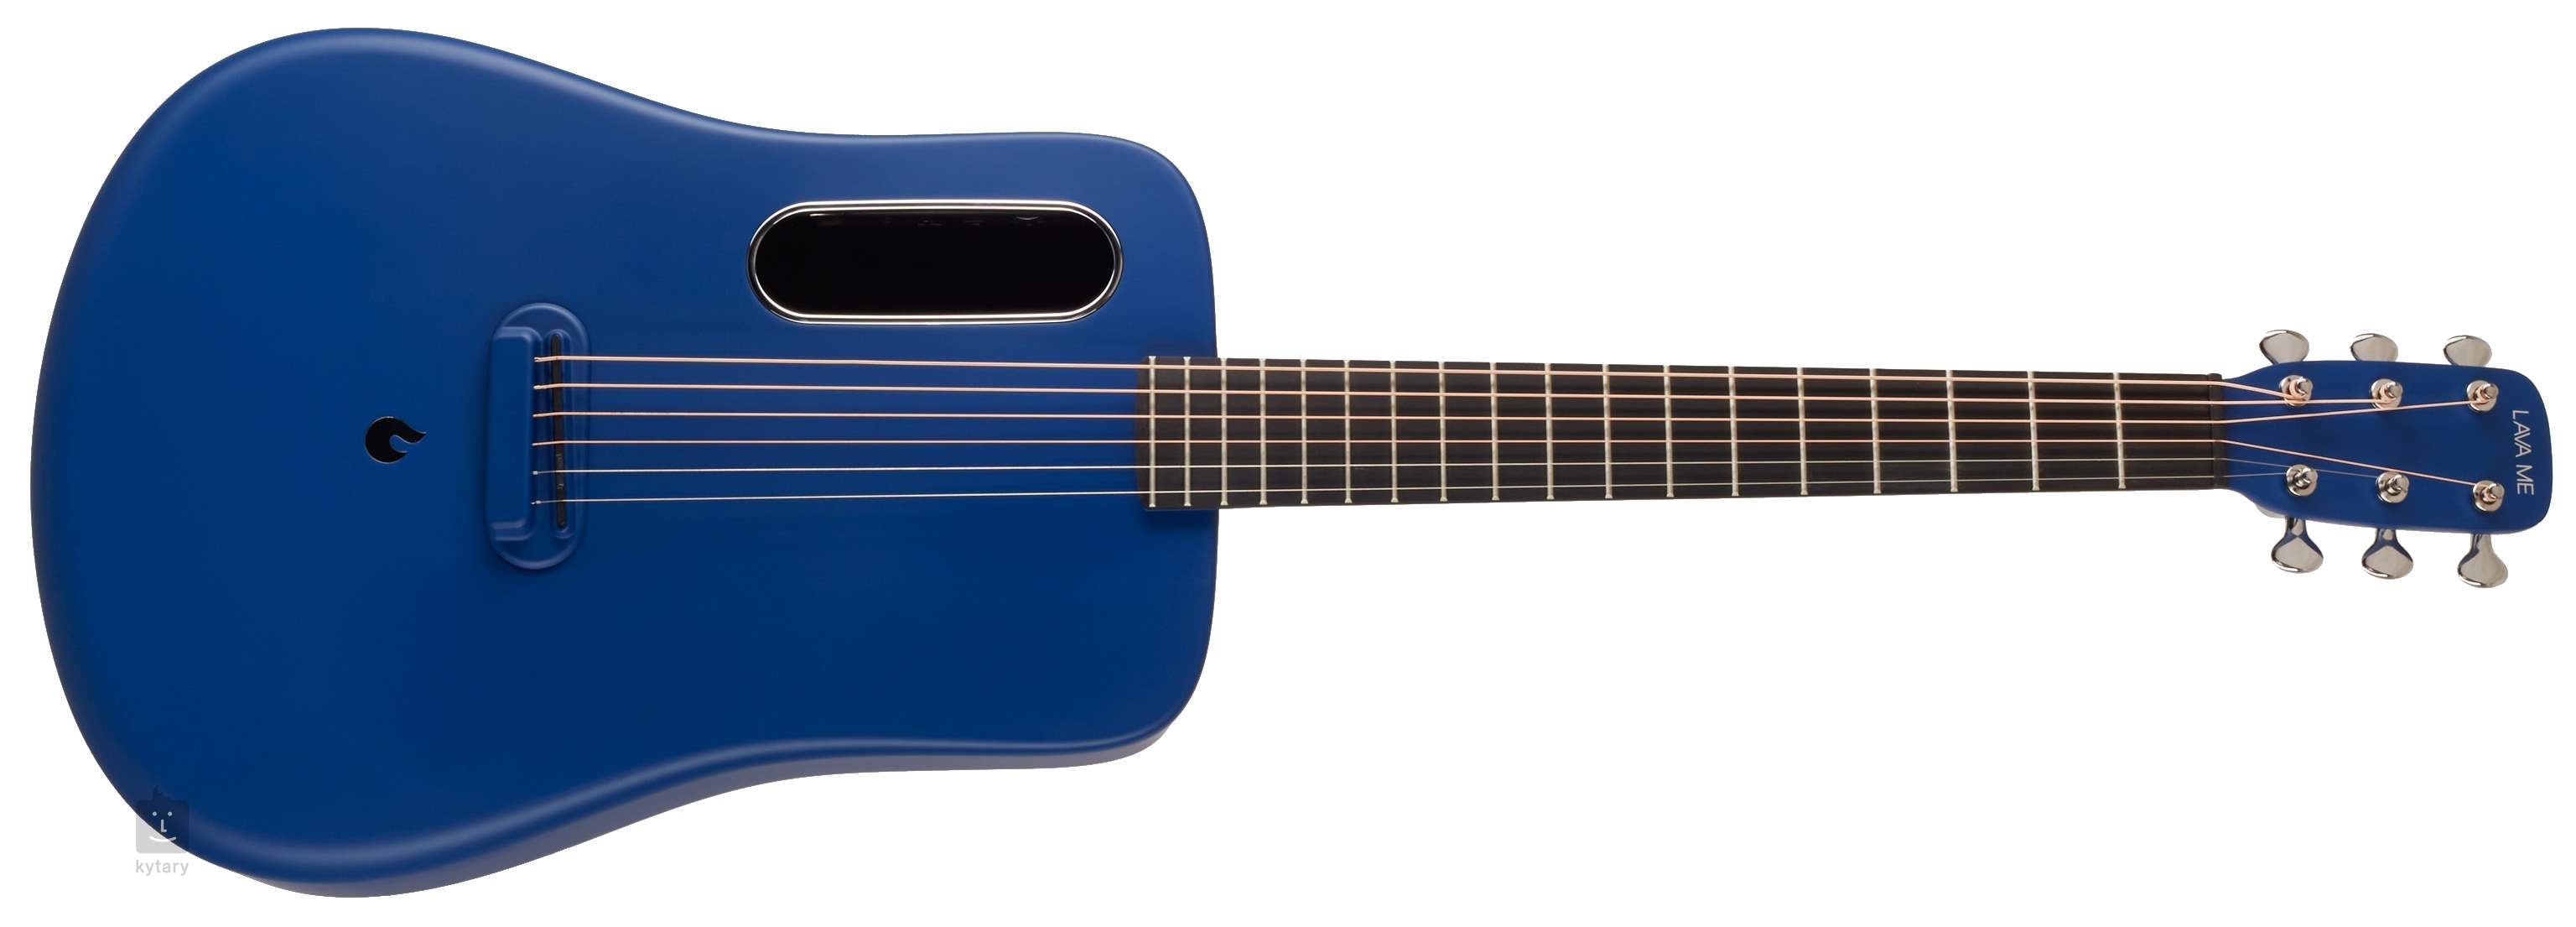 LAVA ME 2 FREEBOOST BLUE, Acoustic Guitar for sale at Richards Guitars.